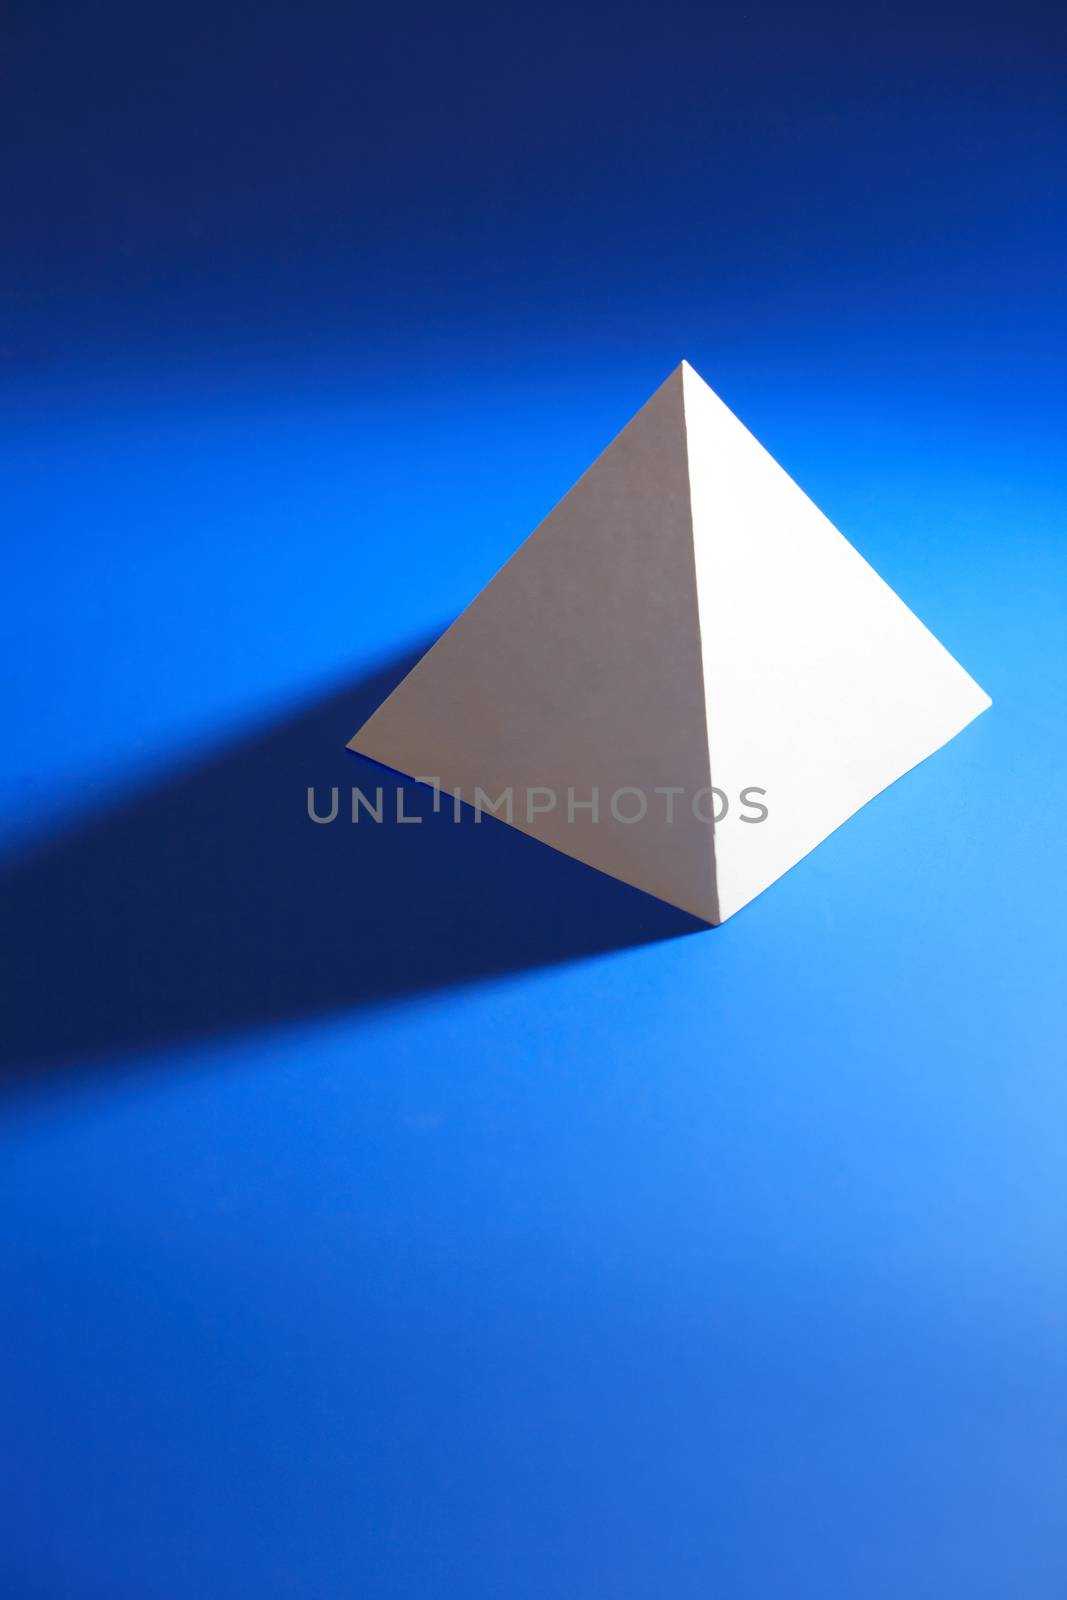 White Pyramid On Blue by kvkirillov